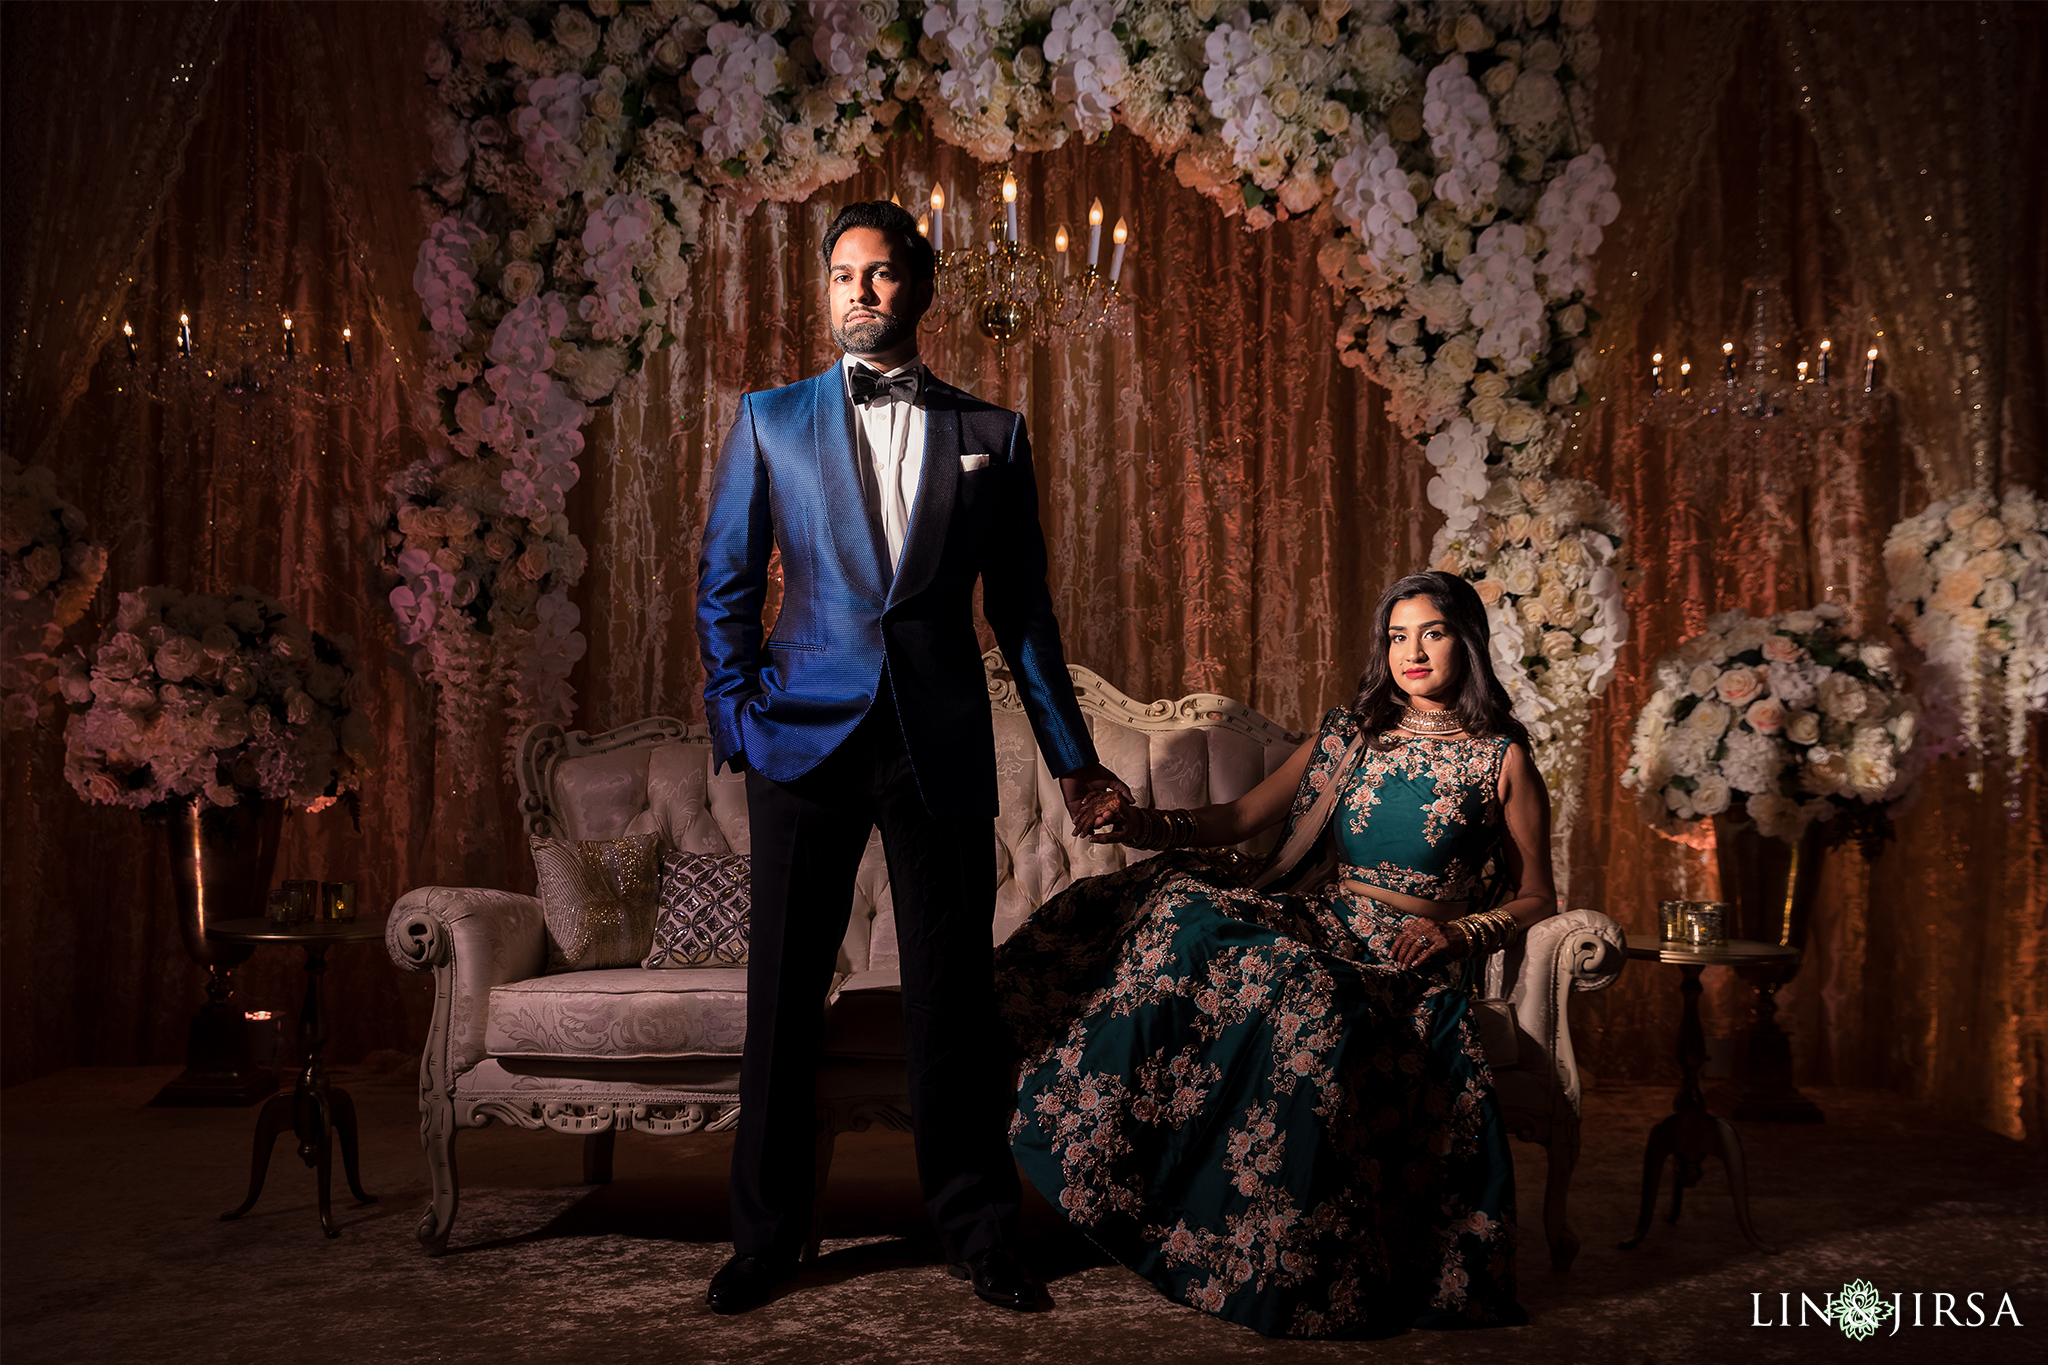 FAIRMONT SAN JOSE INDIAN WEDDING RECEPTION ANAIS WEDDING AND EVENT PLANNING